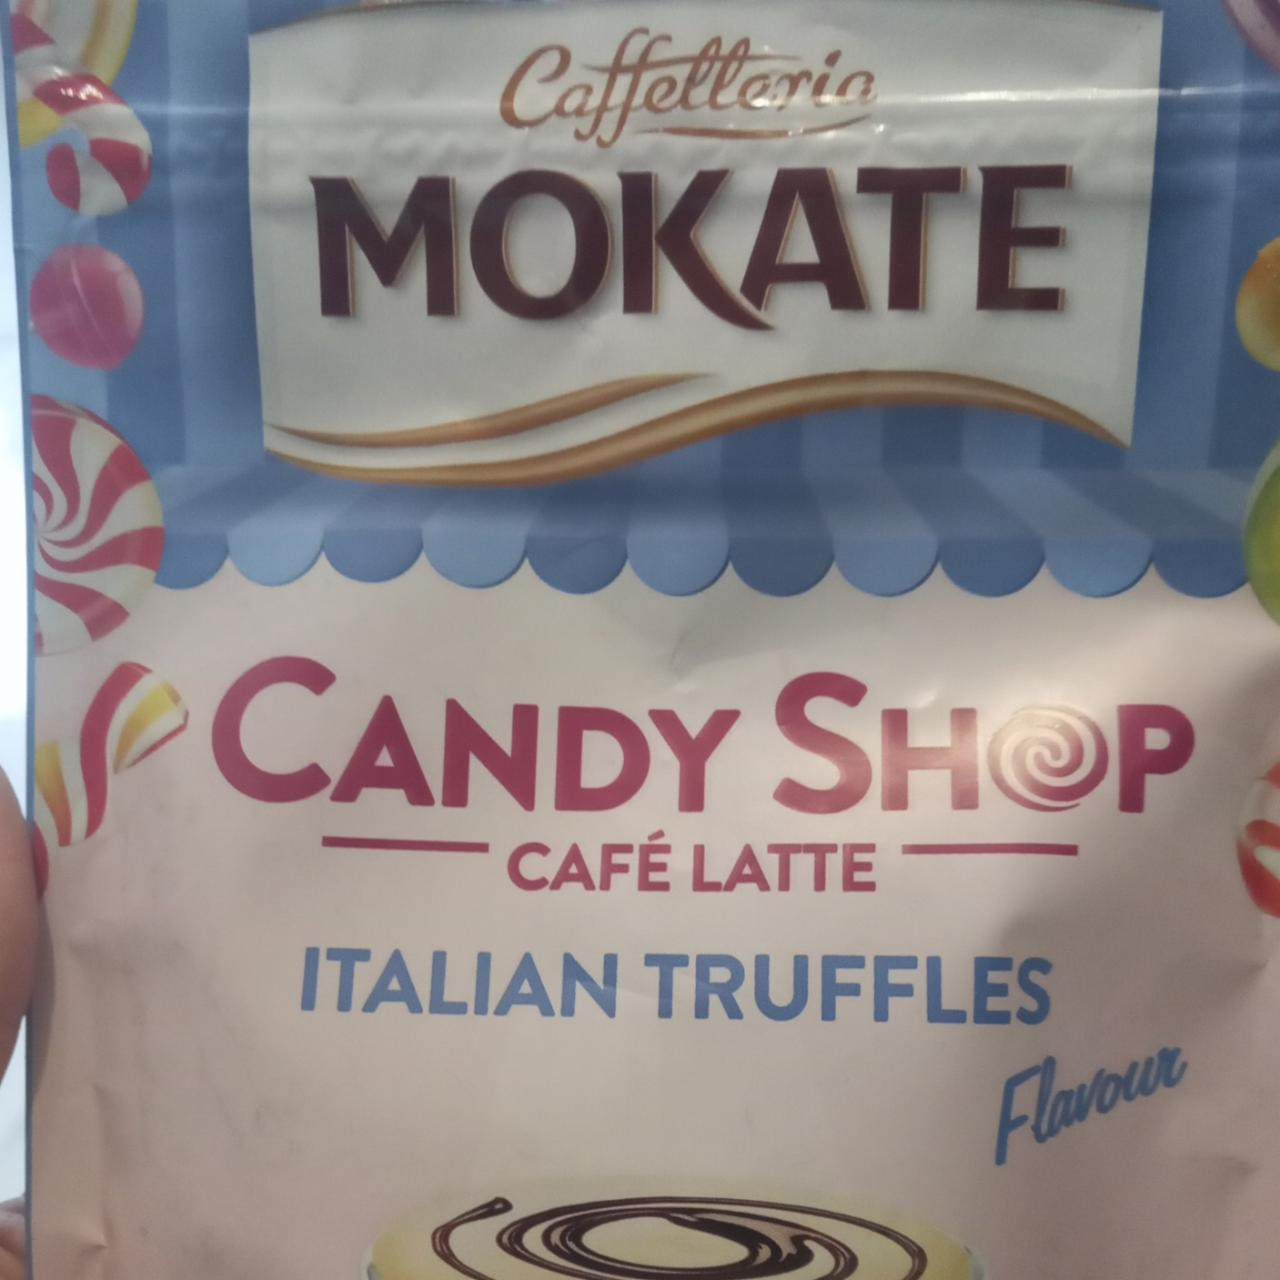 Фото - Candy Shop Italian Truffles Mokate Caffetteria